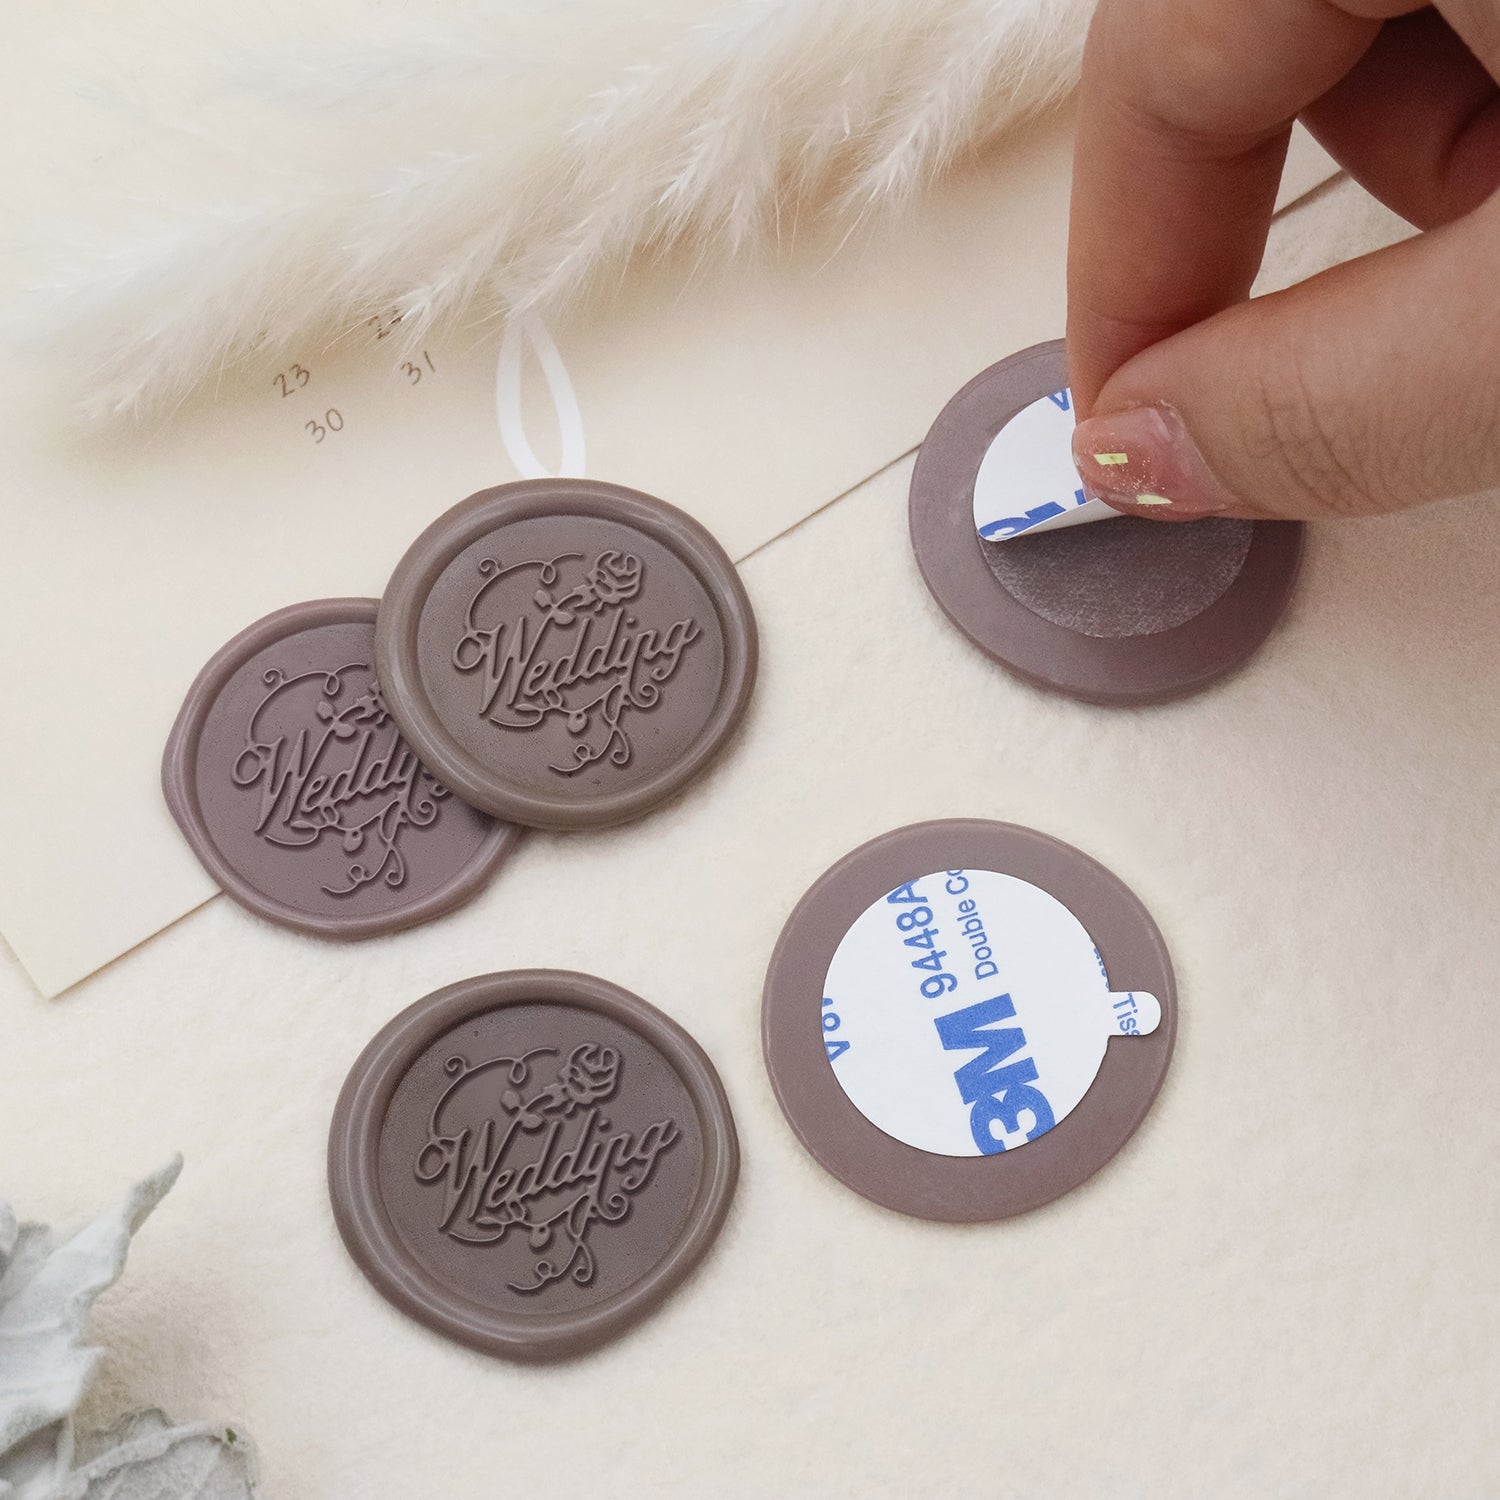 Stamprints Greeting Self-adhesive Wax Seal Stickers - Wedding 2